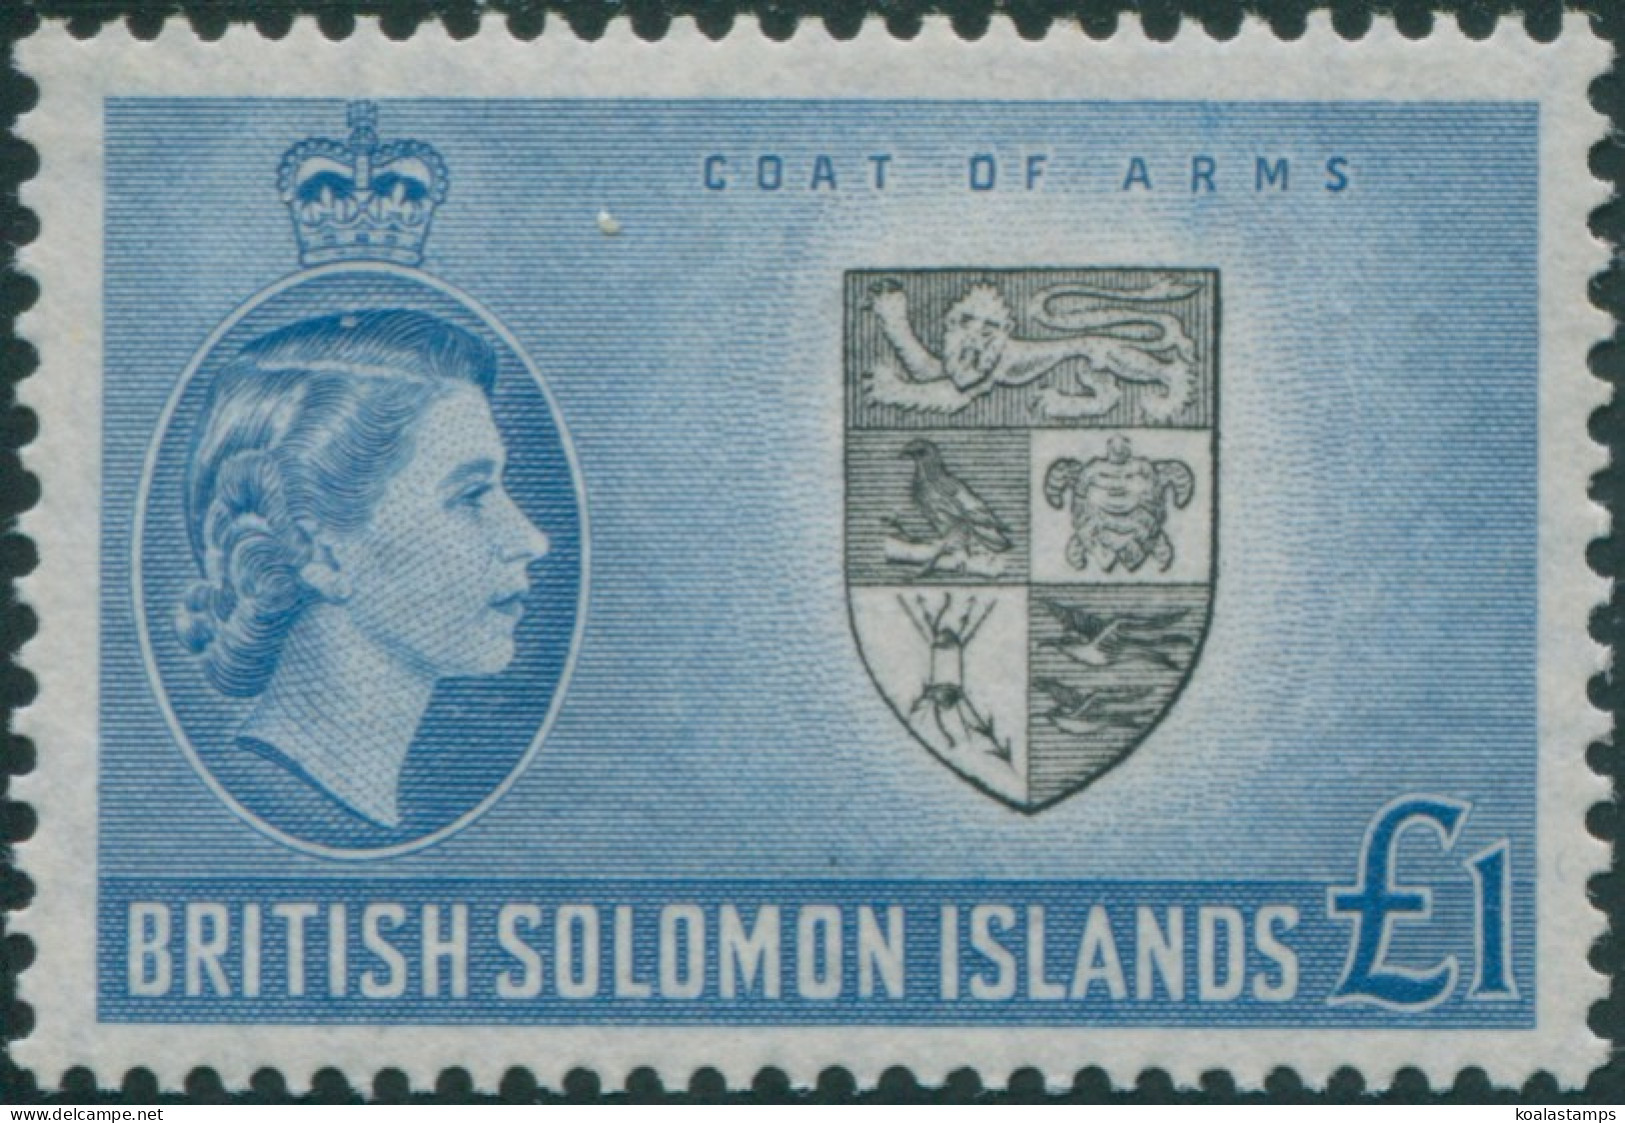 Solomon Islands 1956 SG96 £1 Arms Of The Protectorate MNG - Solomoneilanden (1978-...)